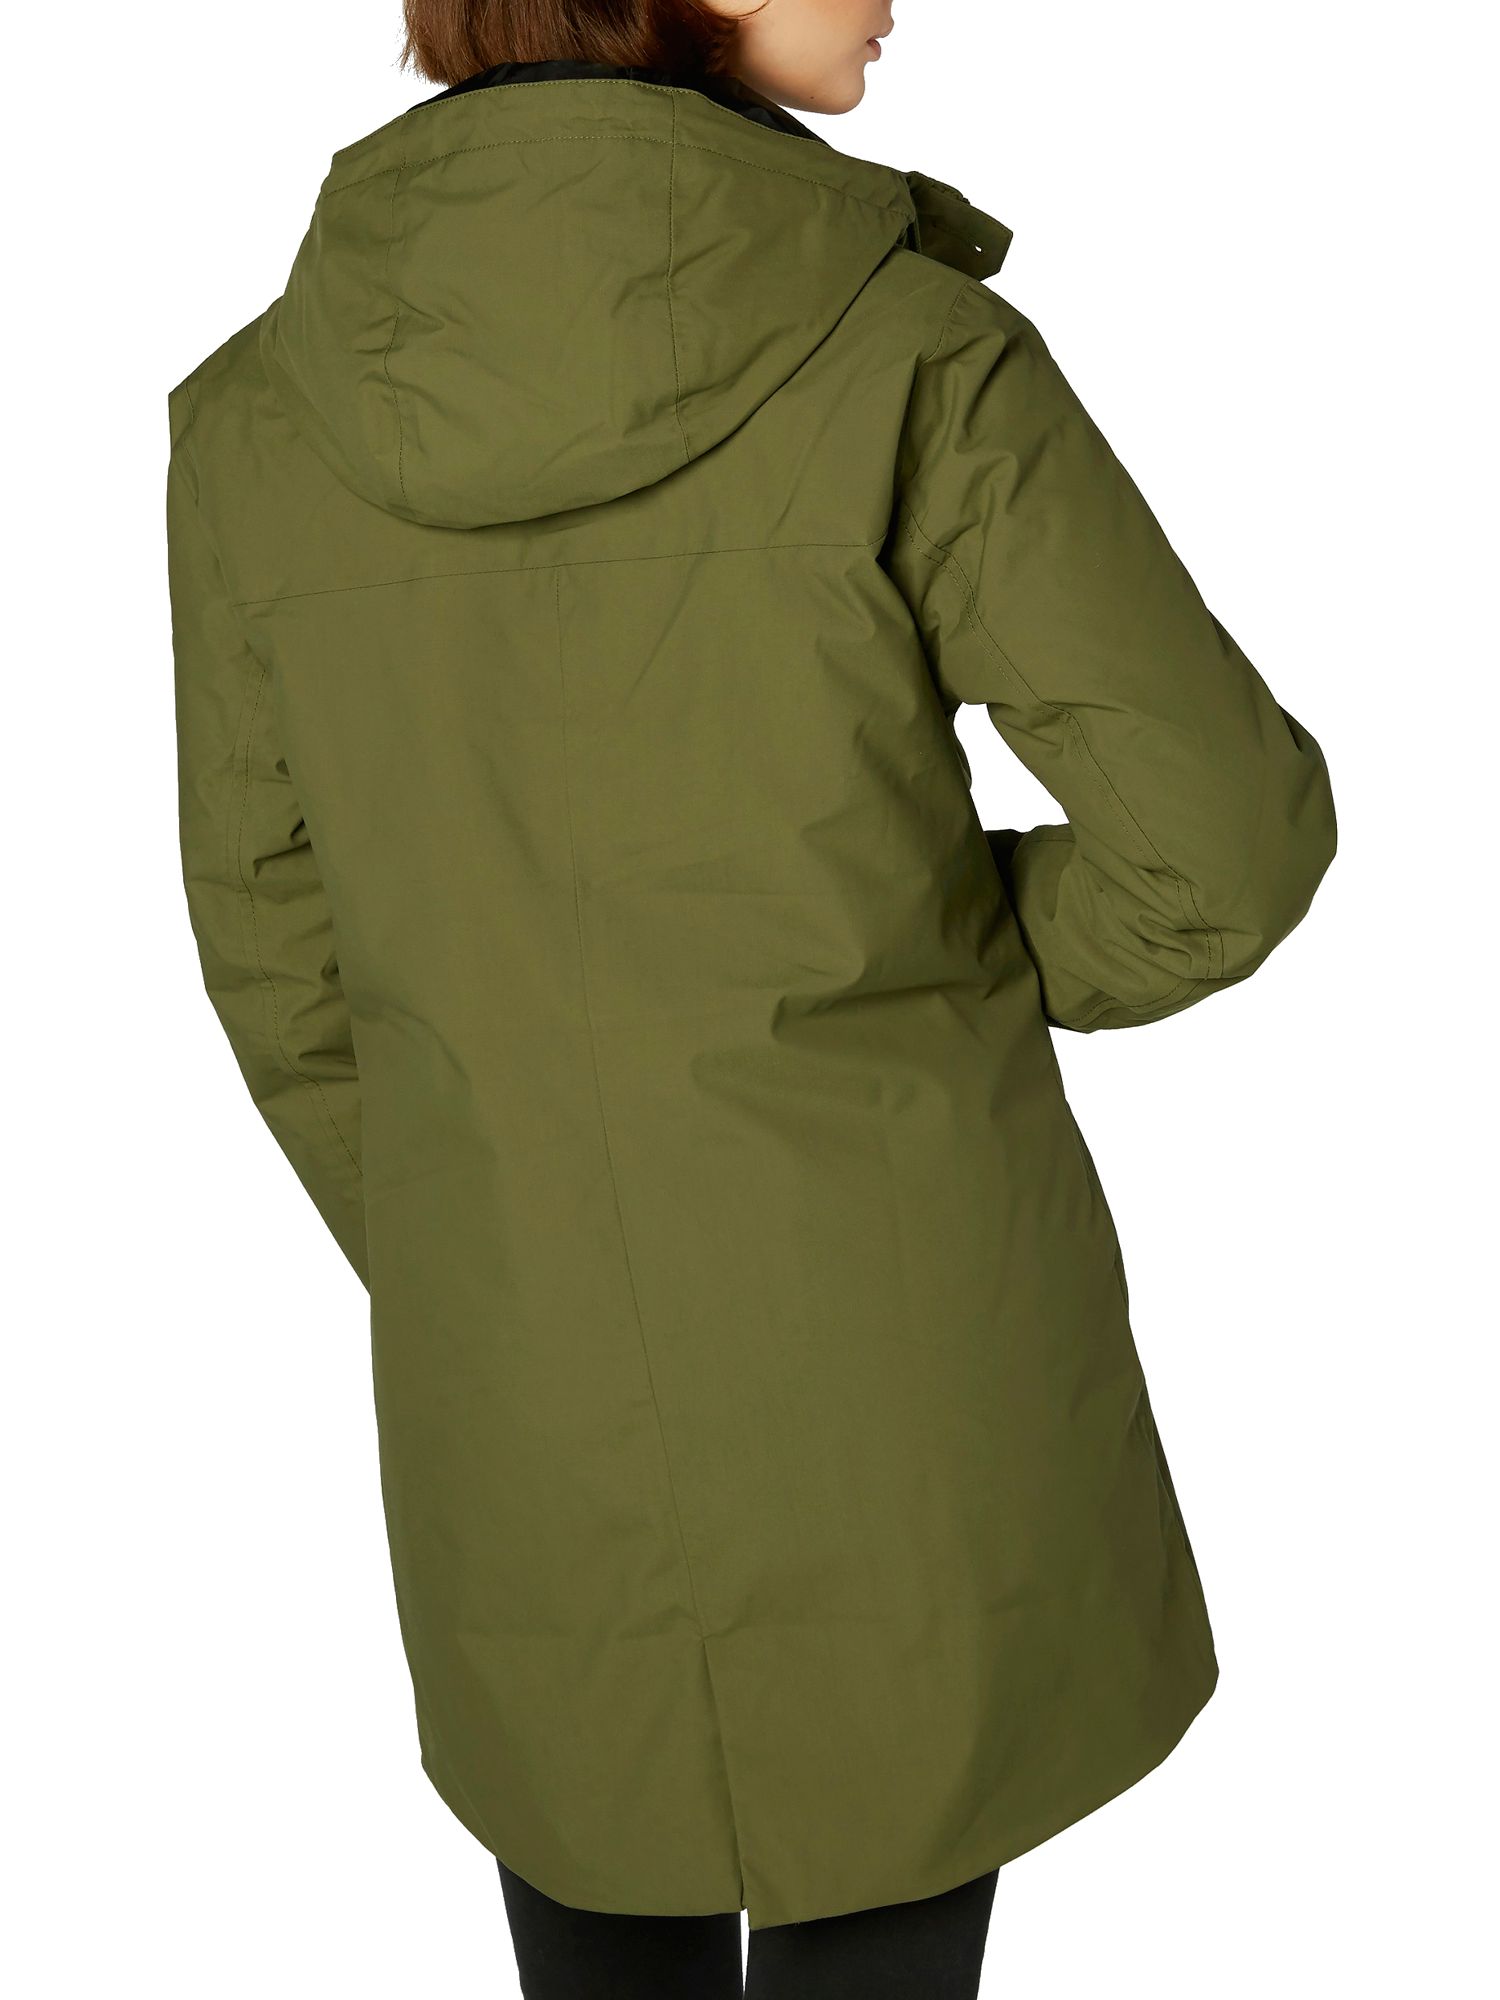 Helly Hansen Ardmore Waterproof Women's Parka Jacket, Ivy Green